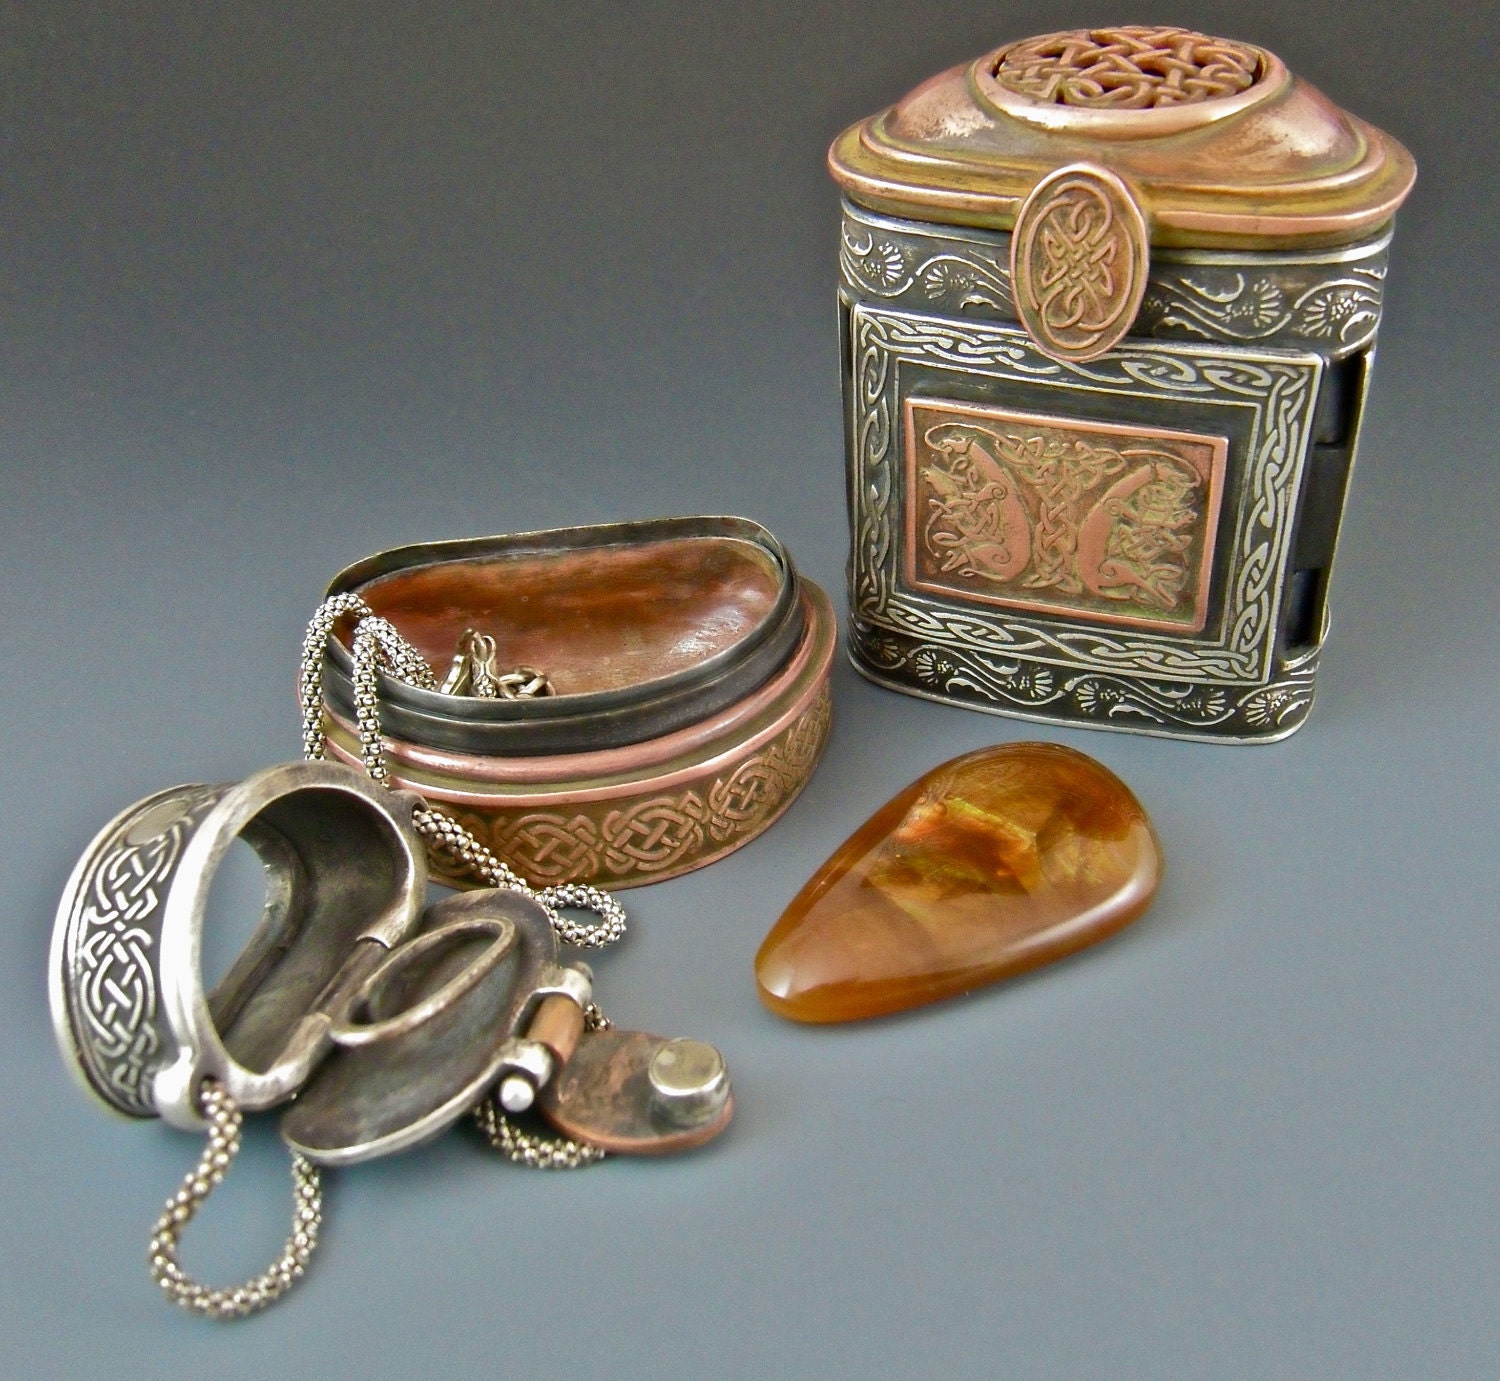 Anam Cara : Reliquary box and necklace